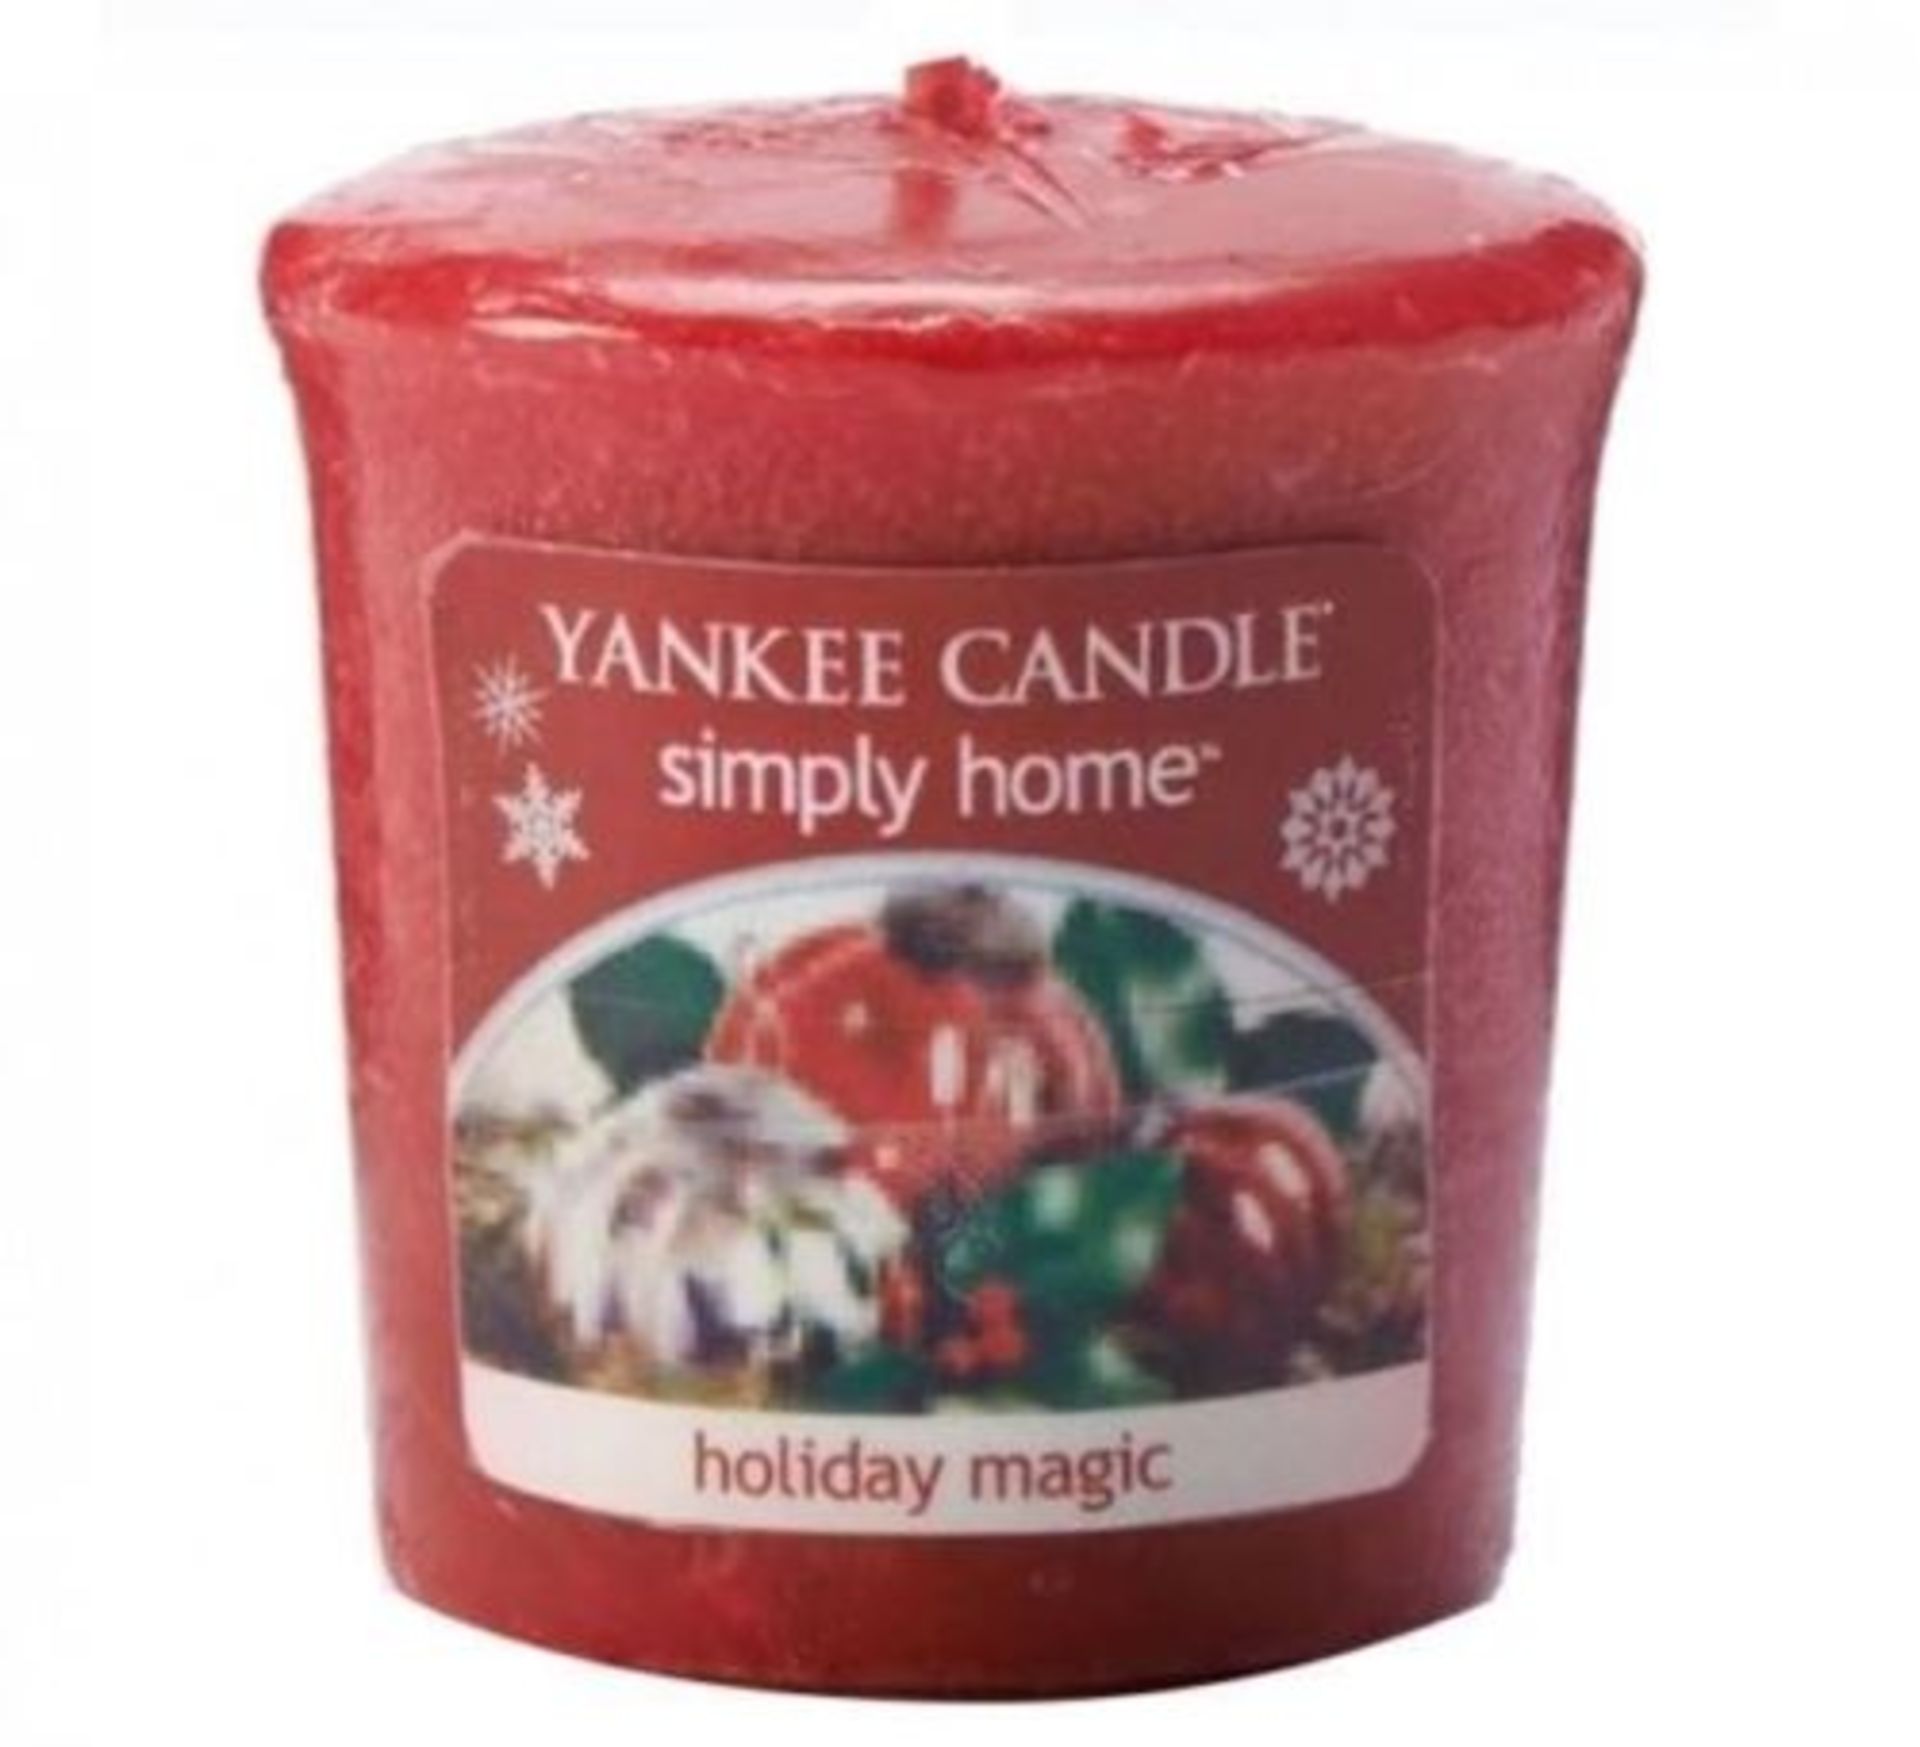 V Brand New 18 x Yankee Candle Votive Holiday Magic 49g eBay Price £22.99 - Image 2 of 2